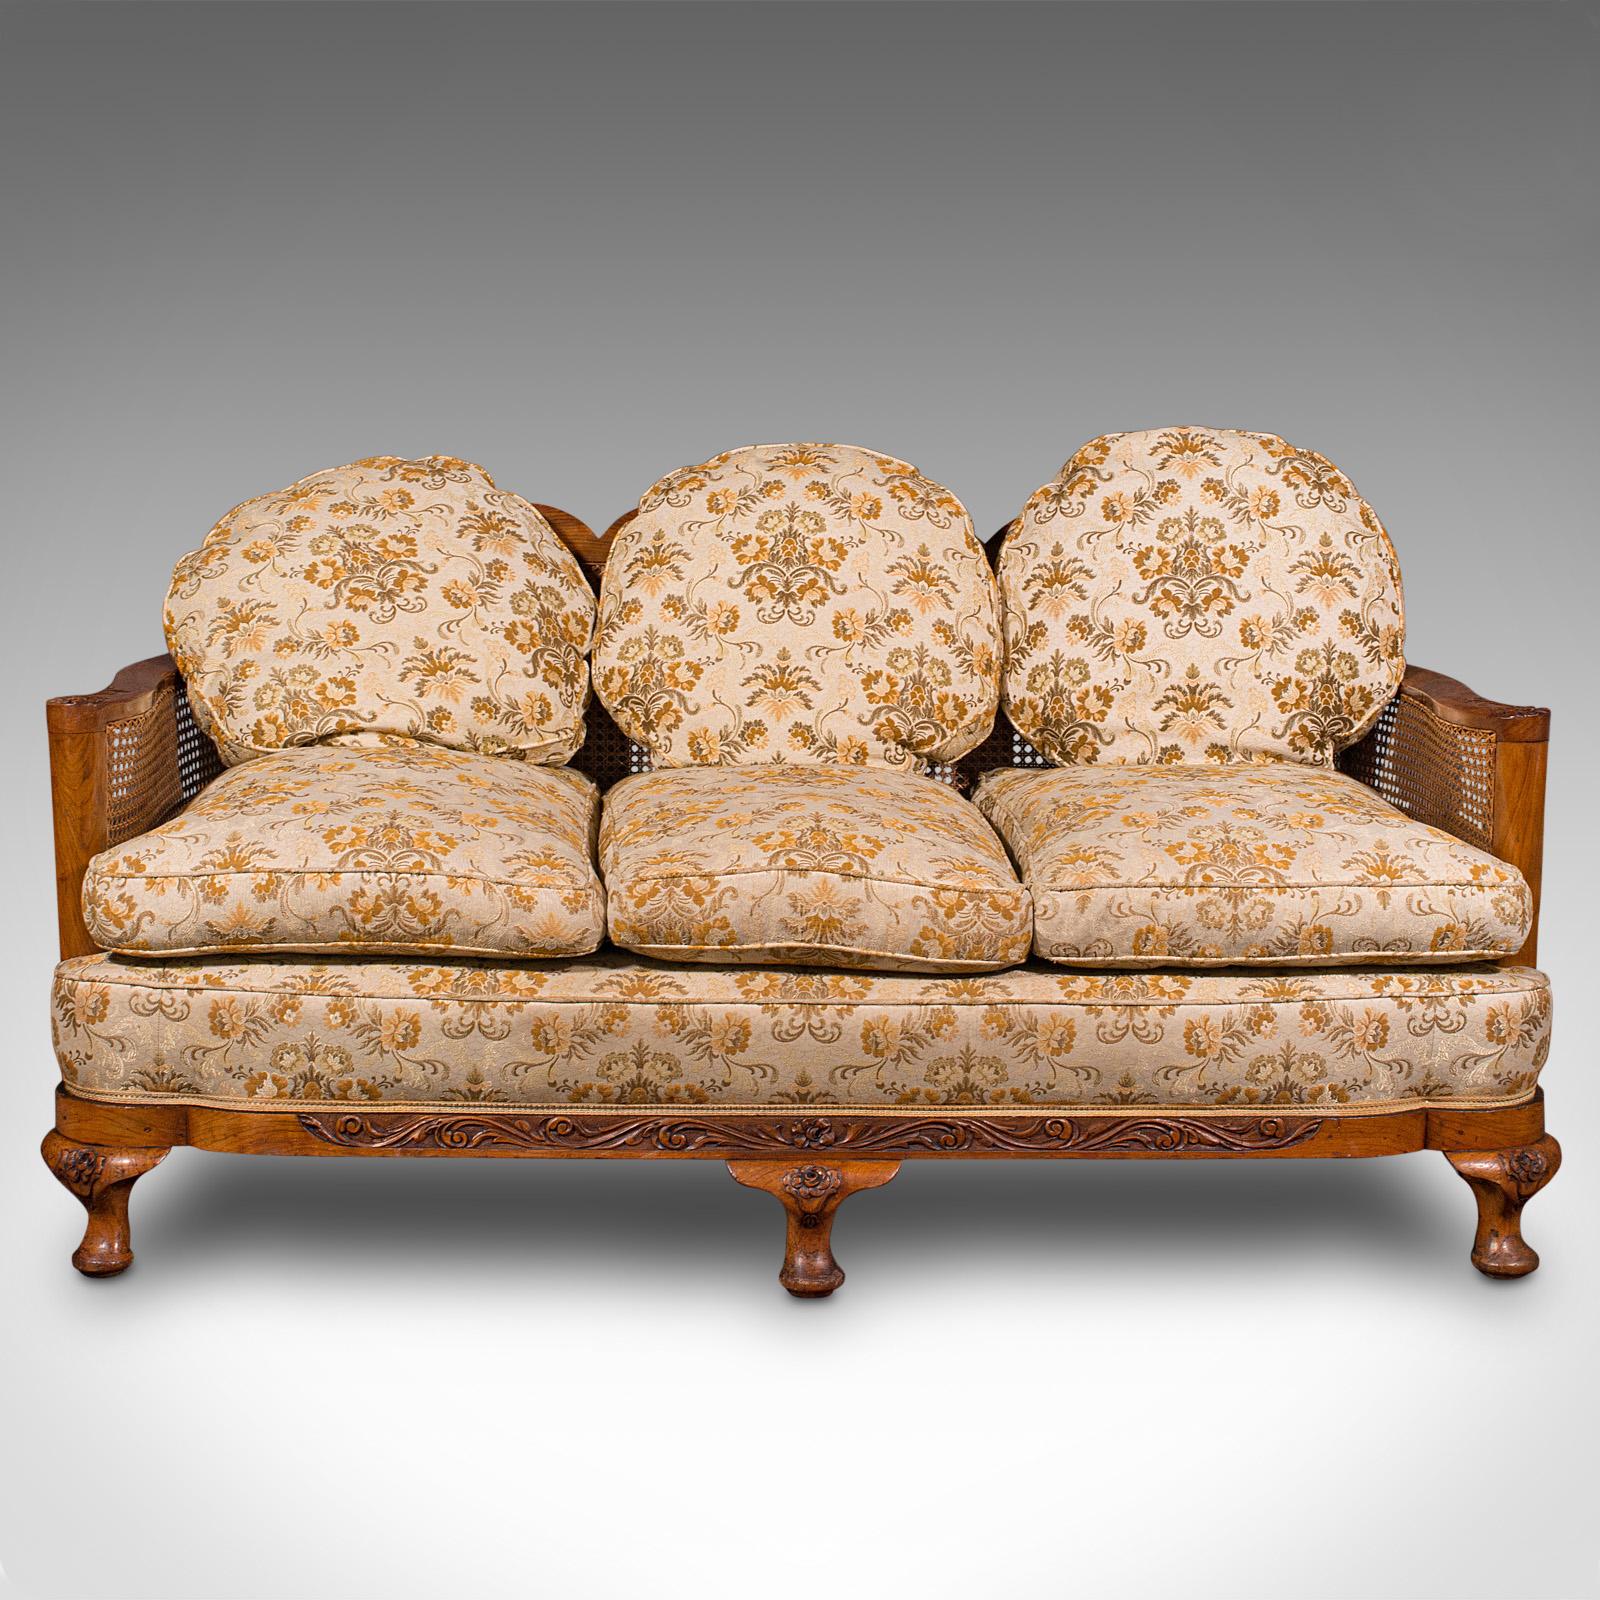 20th Century Antique Bergere Sofa Suite, English, Walnut, 3 Seat Settee, Armchair, Edwardian